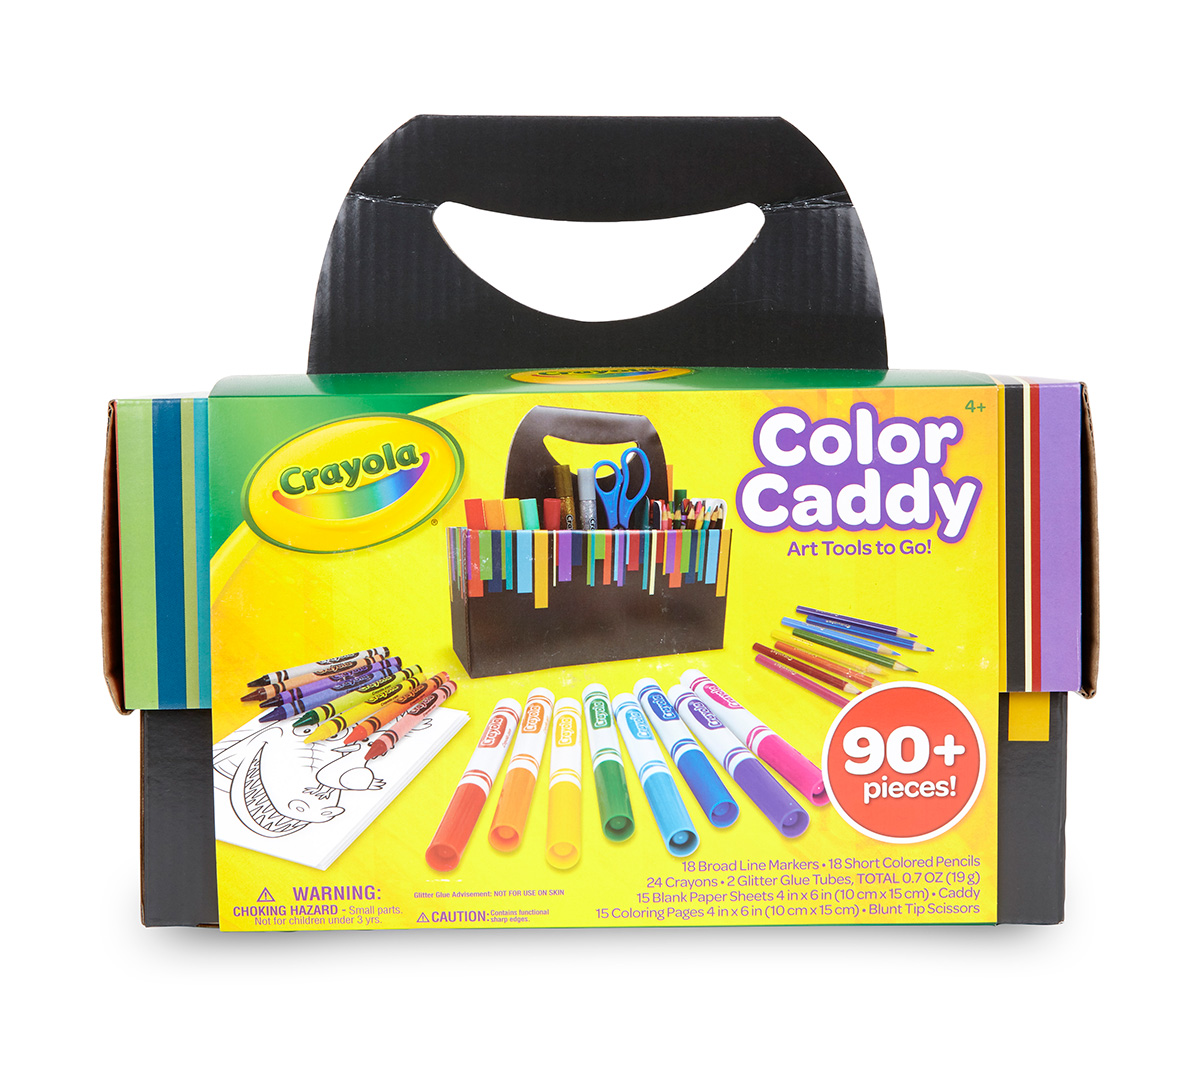 Crayola Color Caddy, Coloring Set and Storage, 18 Markers, 24 Crayons